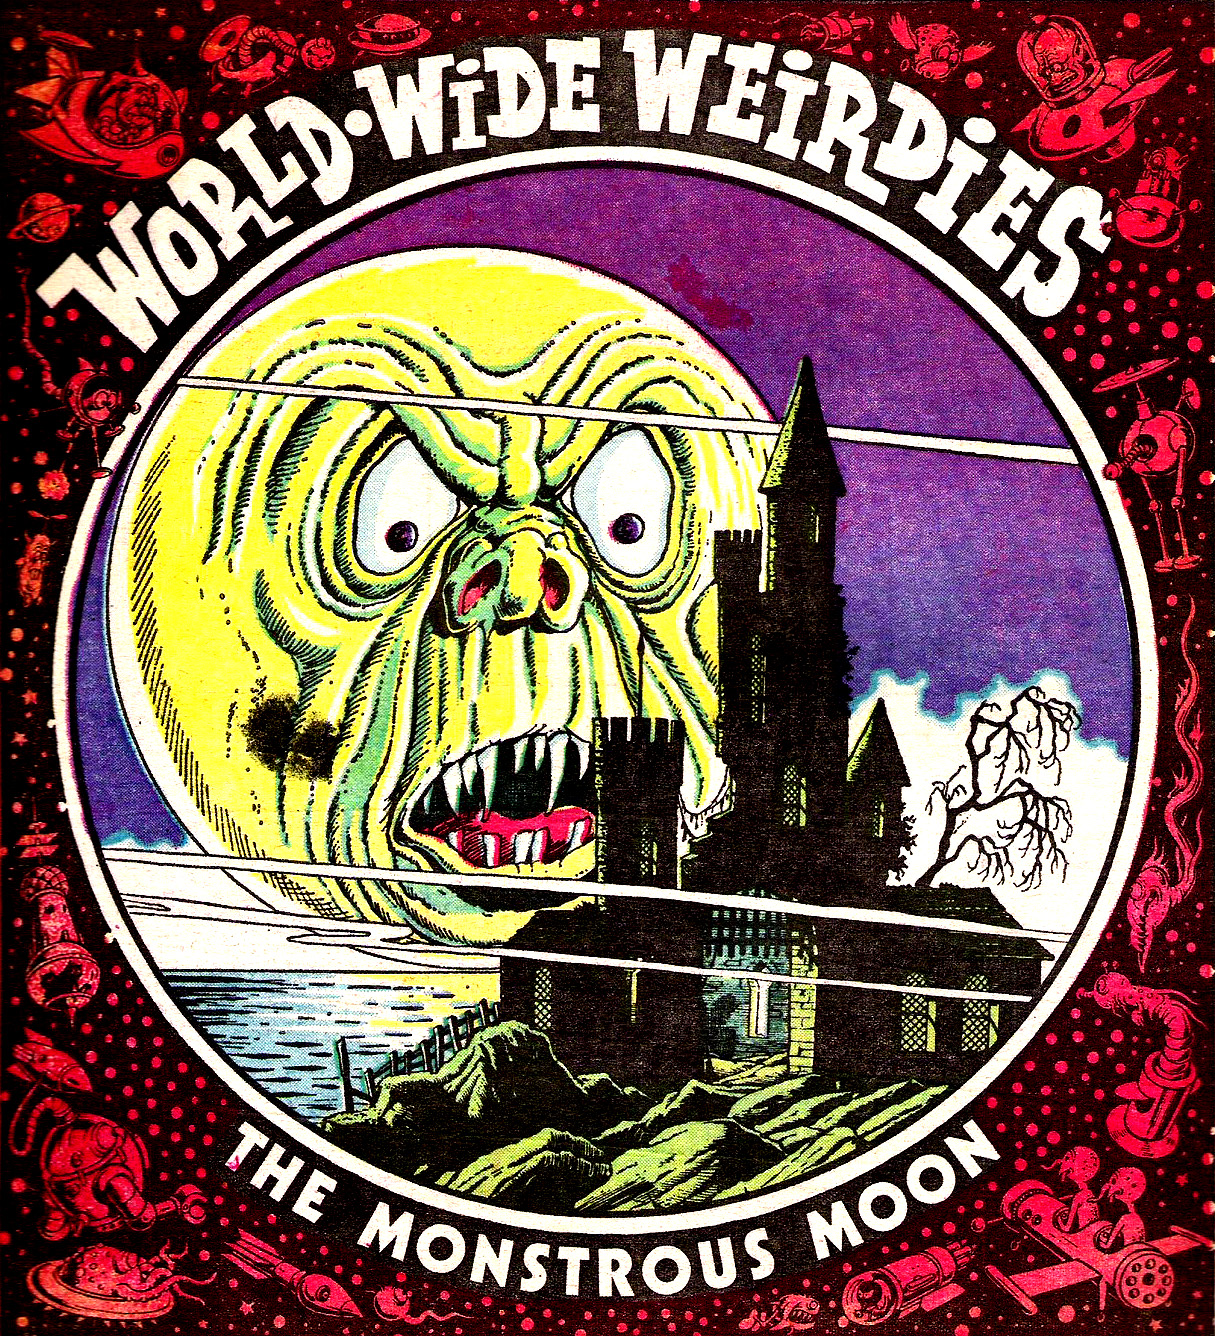 Ken Reid - World Wide Weirdies 21